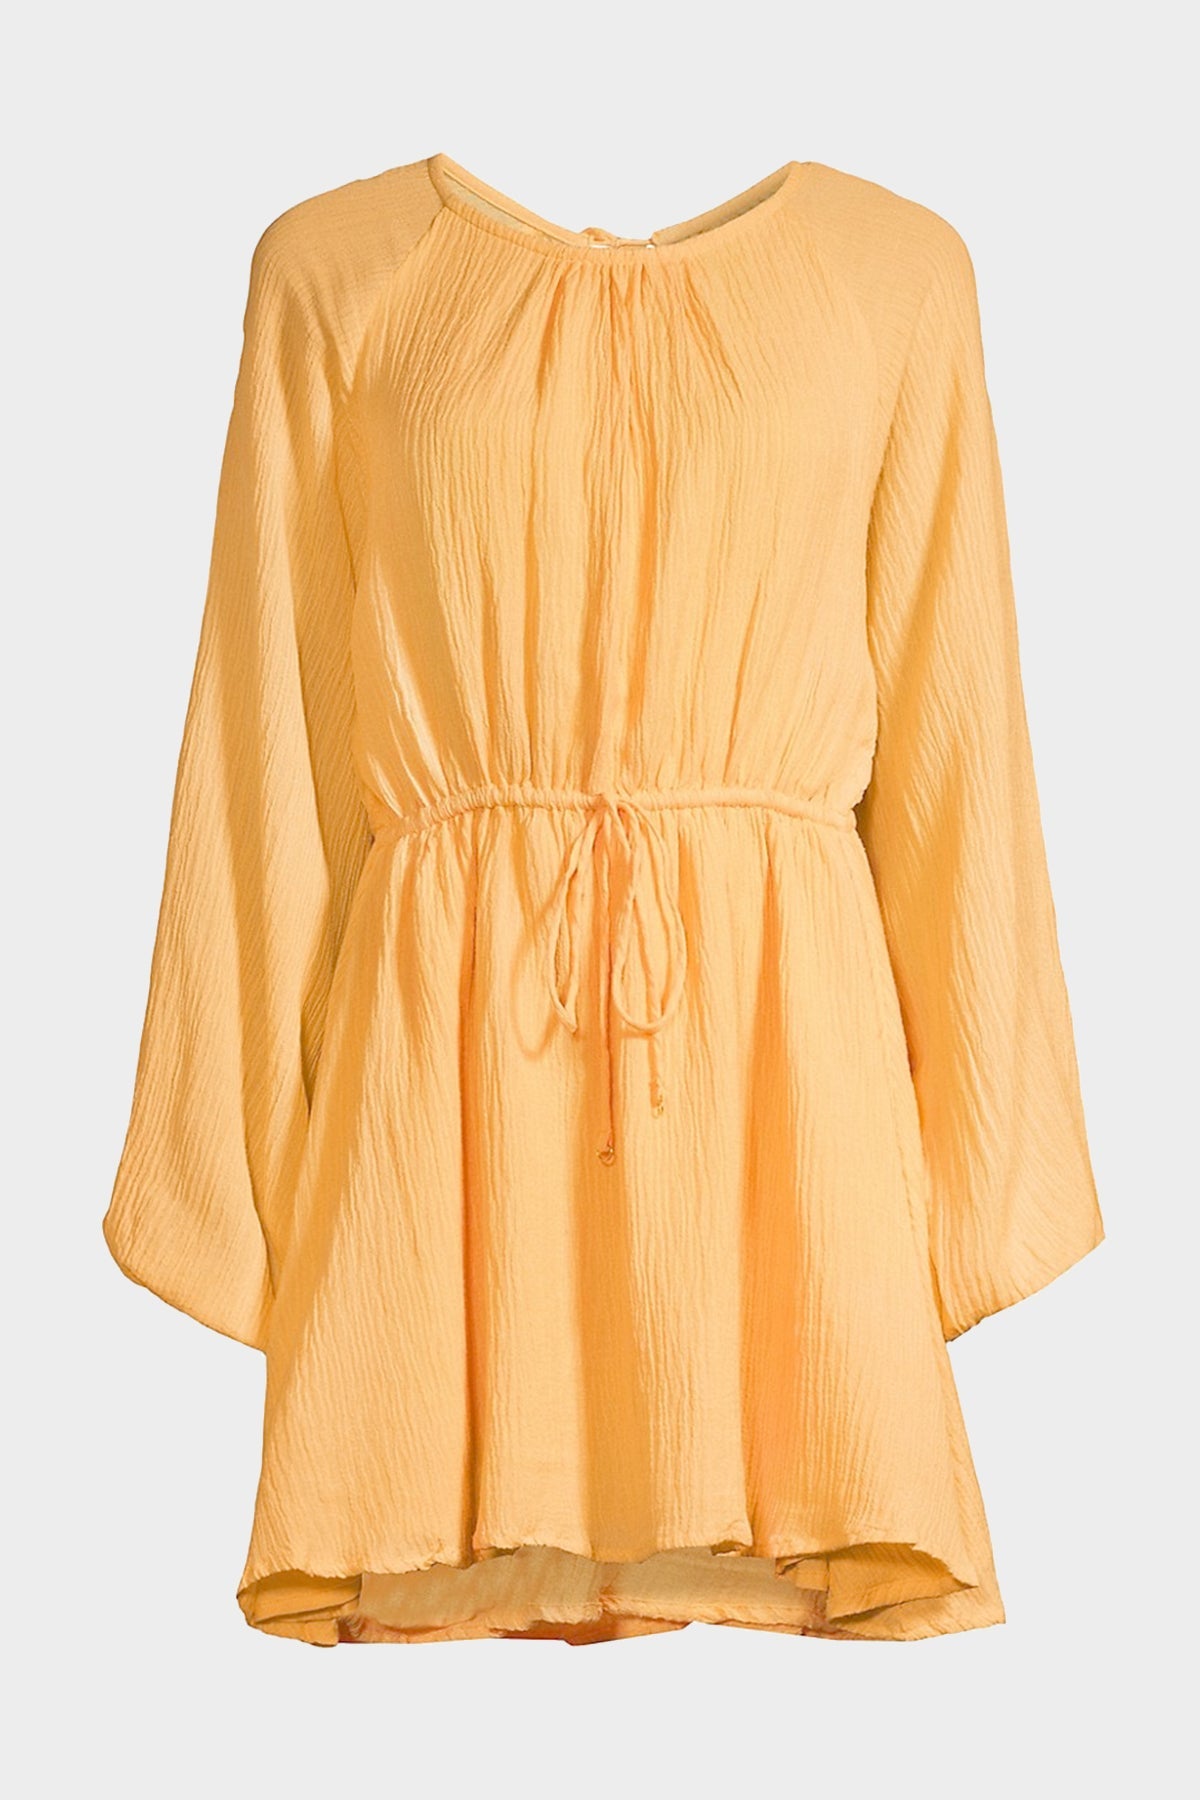 Constance Mini Dress in Saffron - shop-olivia.com